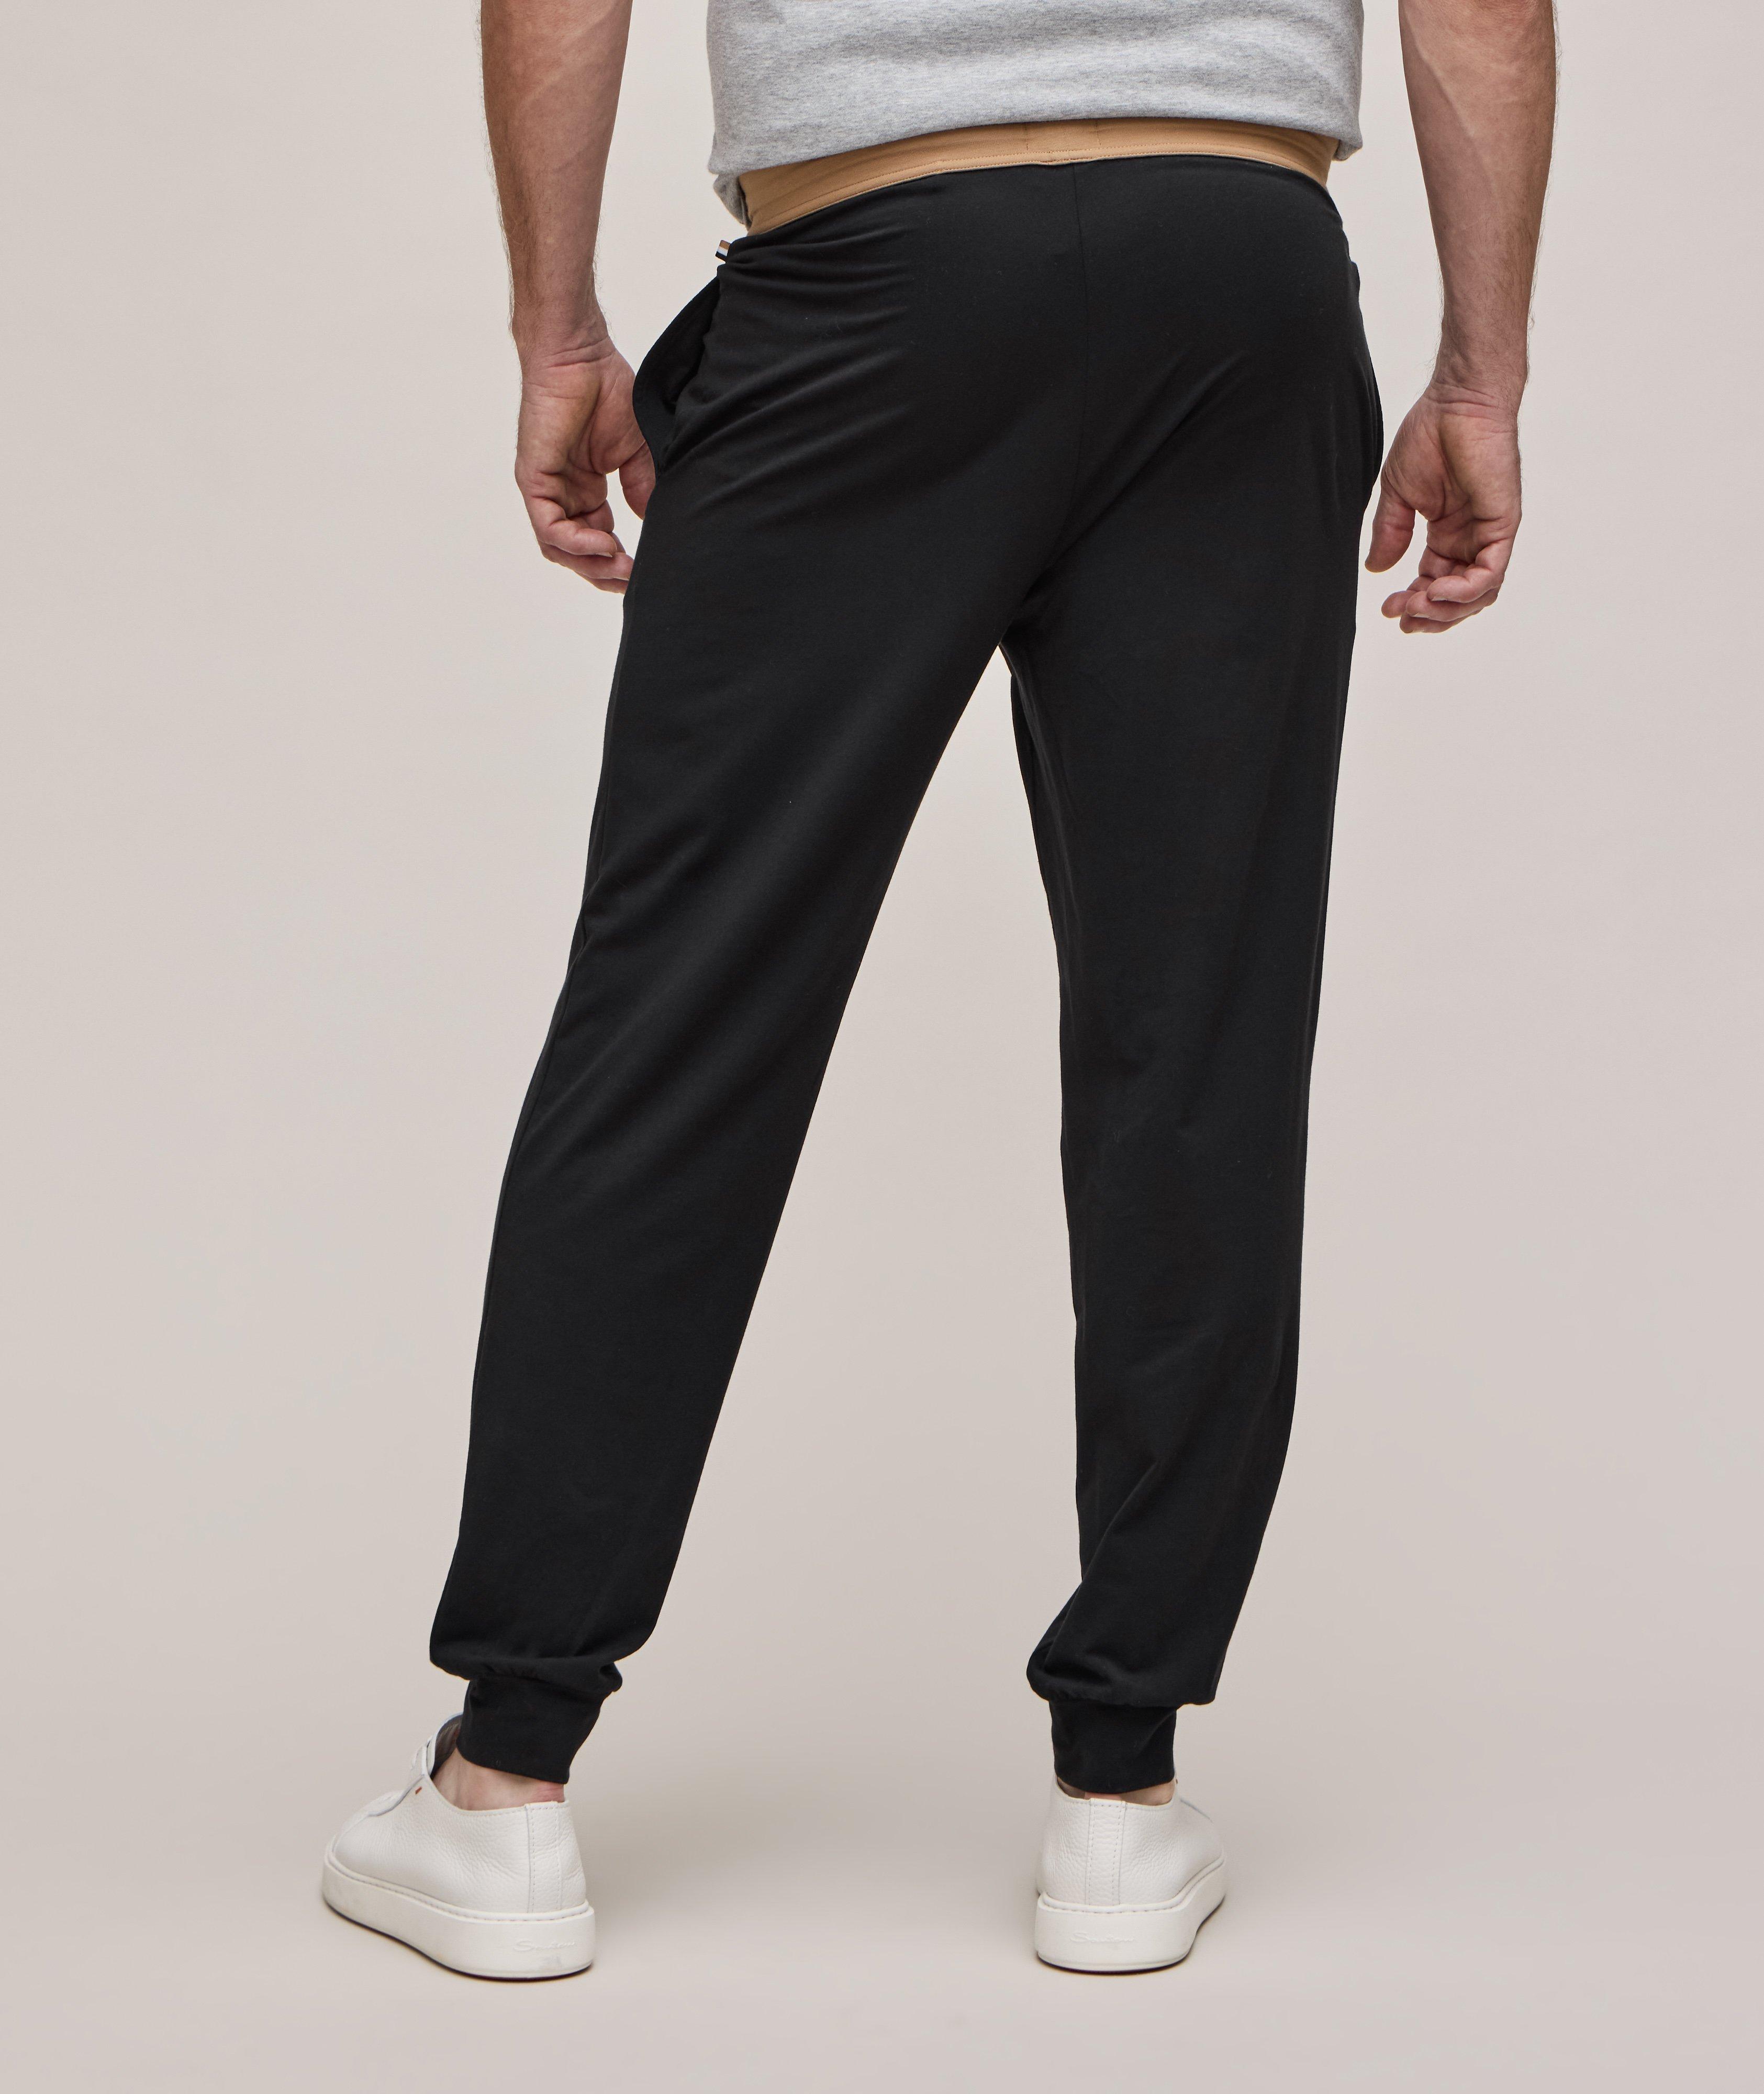 Organic Cotton Loungewear Pants Unisex Activewear Geometric